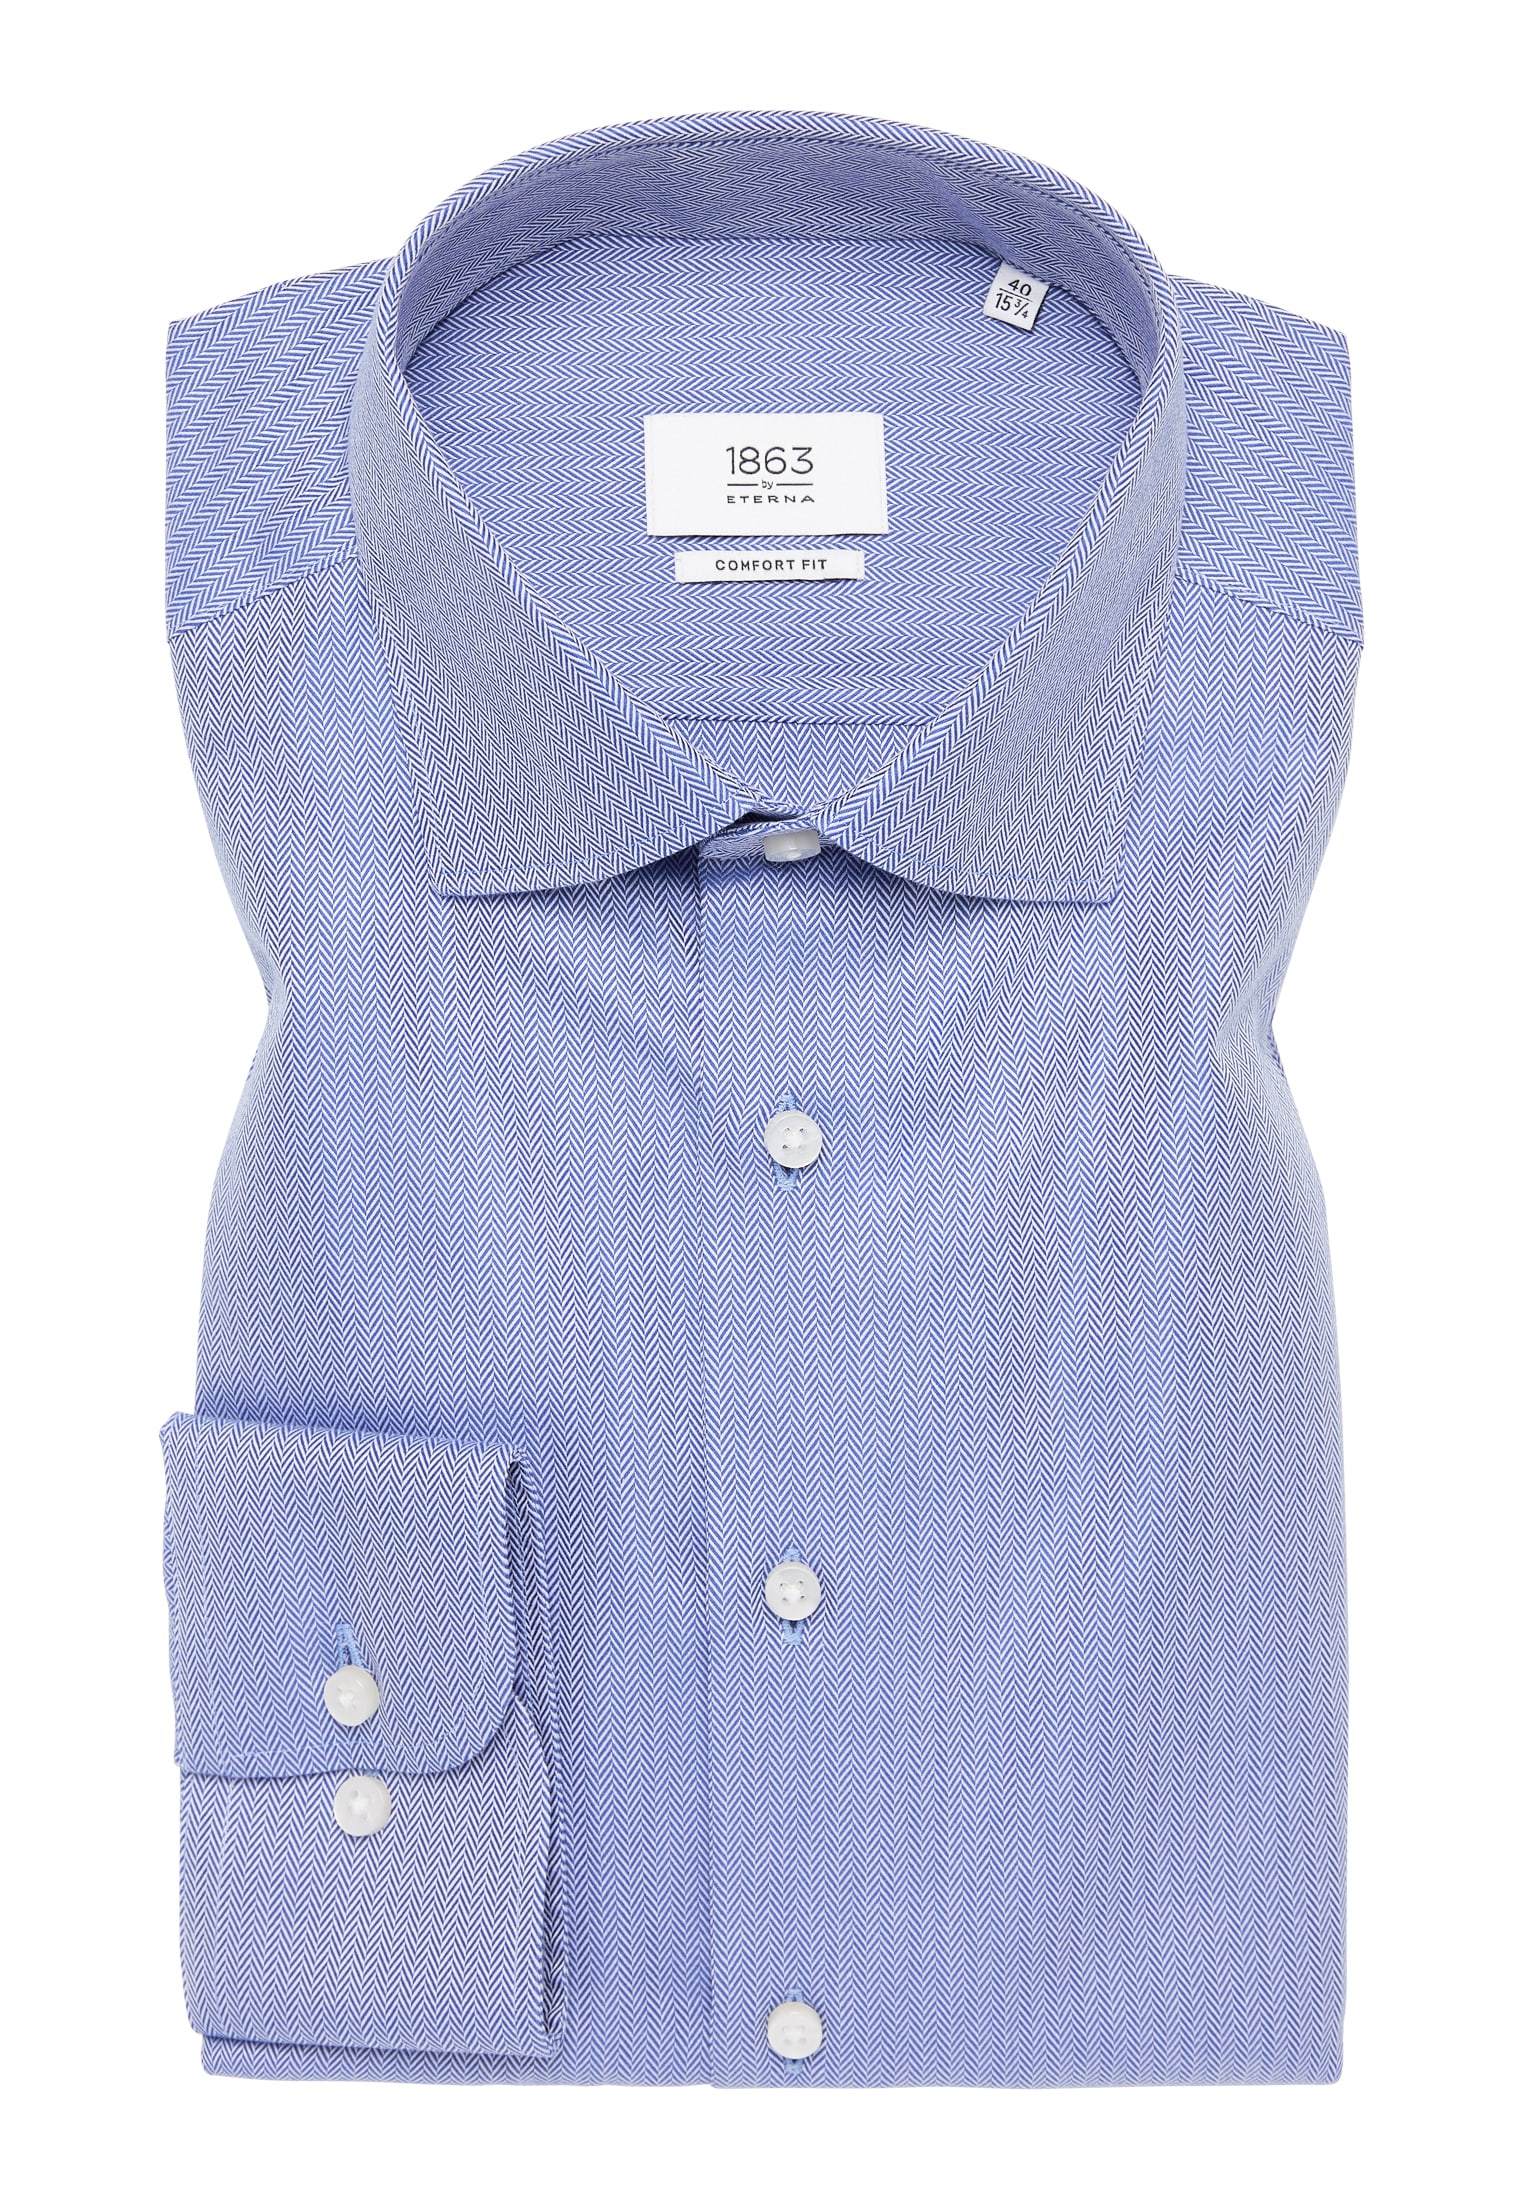 40 blue 1SH12506-01-51-40-1/1 COMFORT in royal | sleeve | | Shirt royal long FIT | blue plain